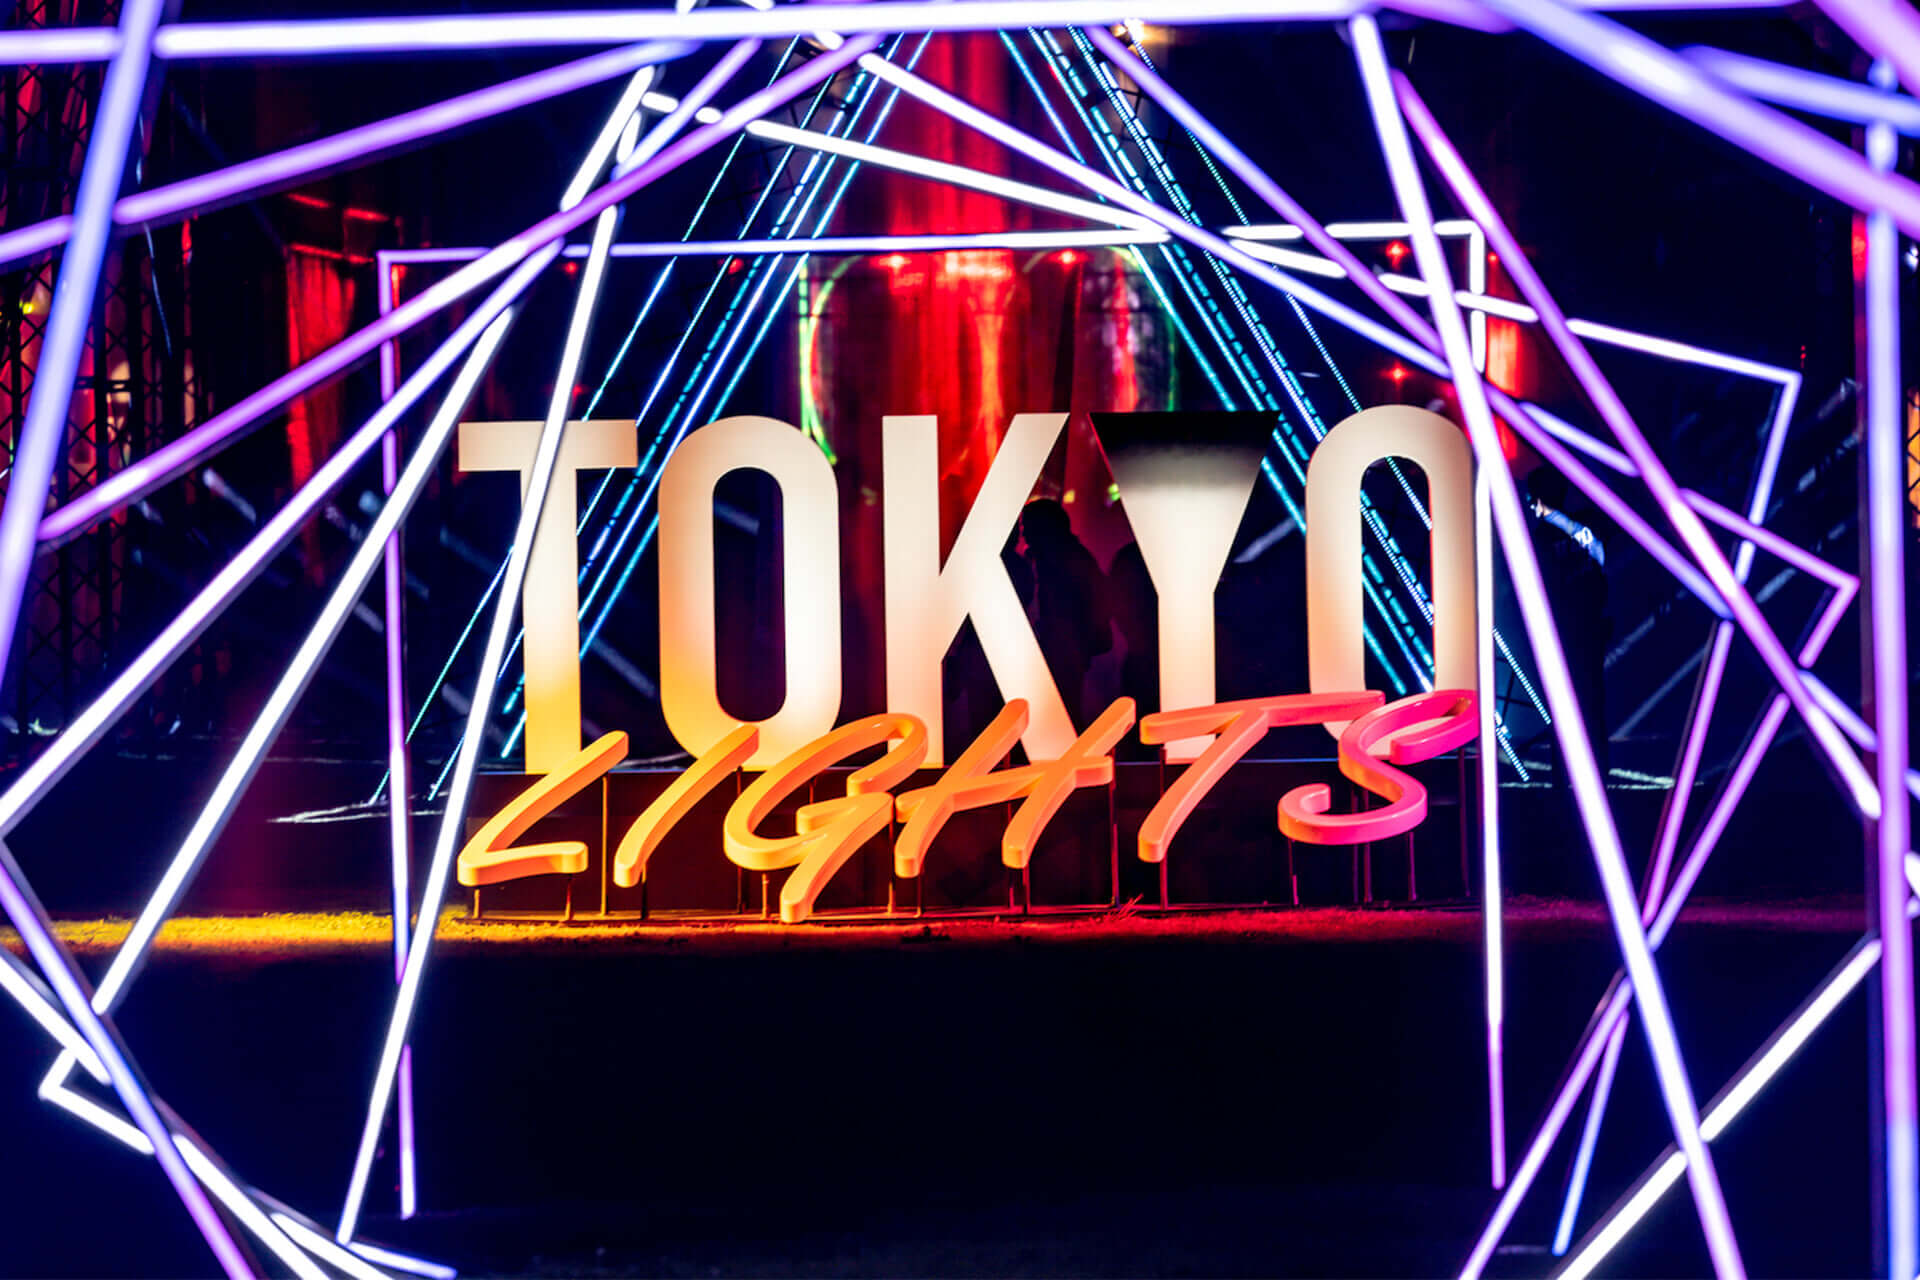 TOKYO LIGHTS 2022